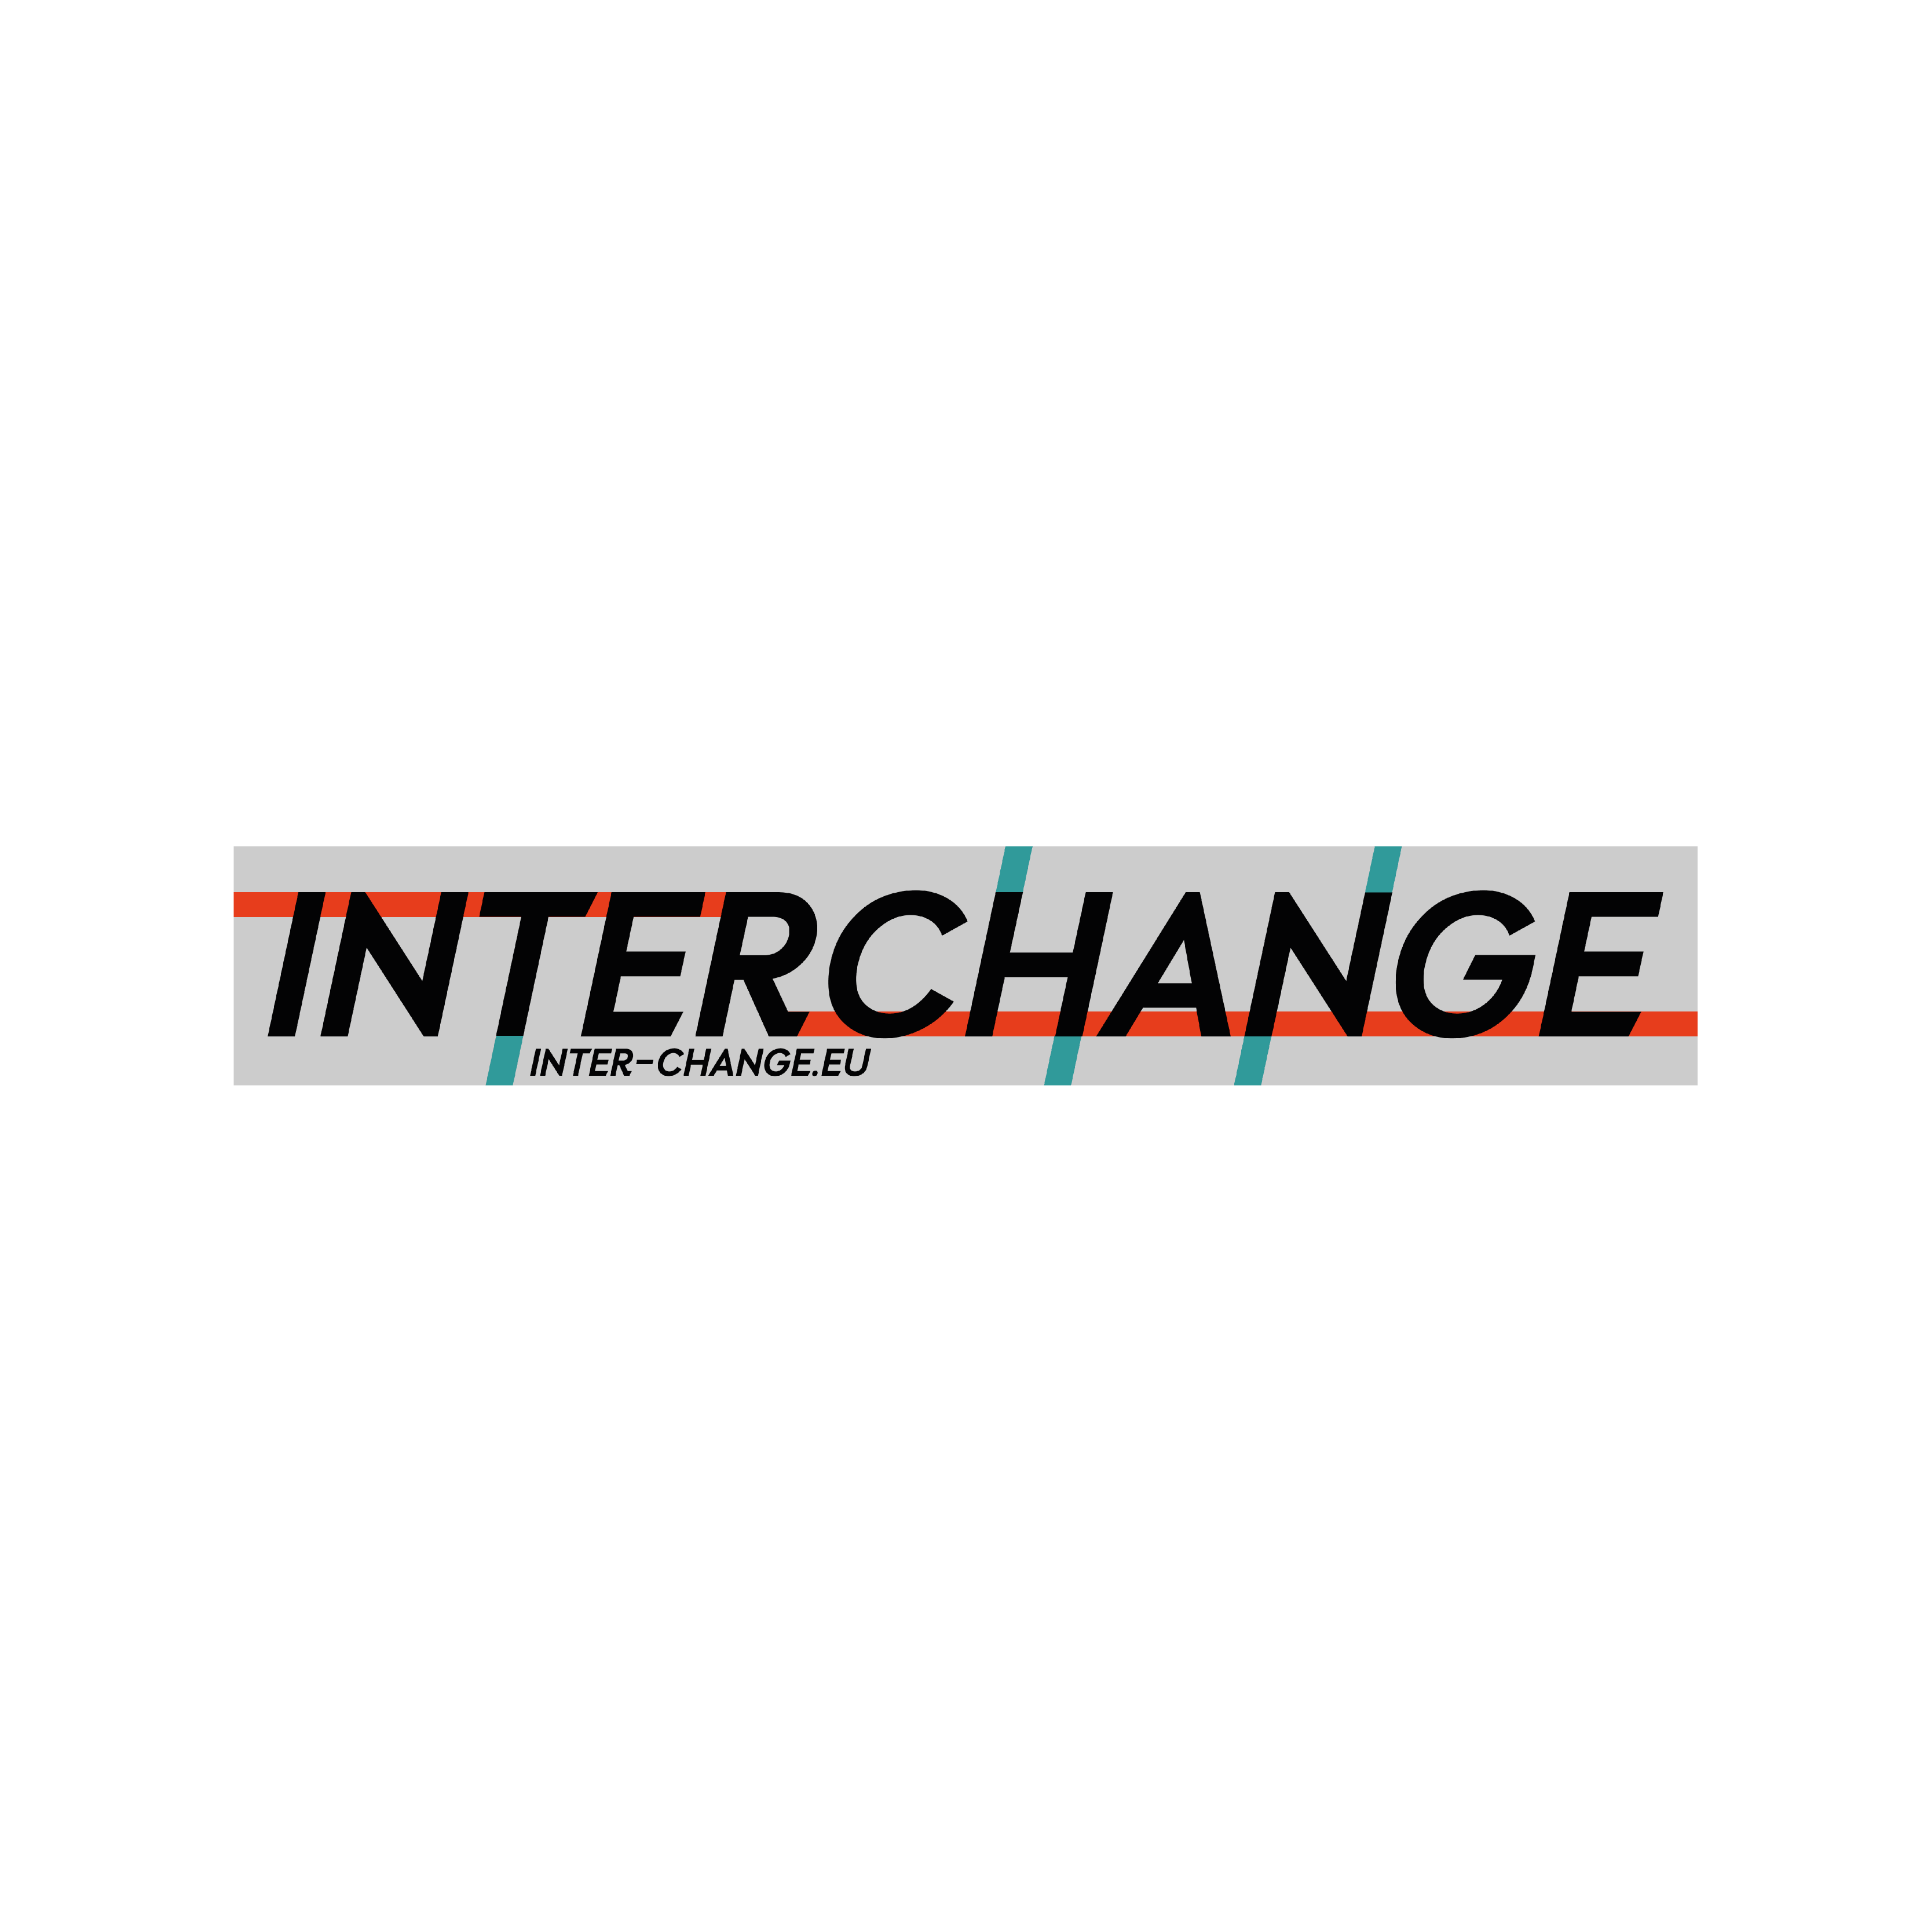 Interchange Non-Profit gUG (Germany) https://www.inter-change.eu/